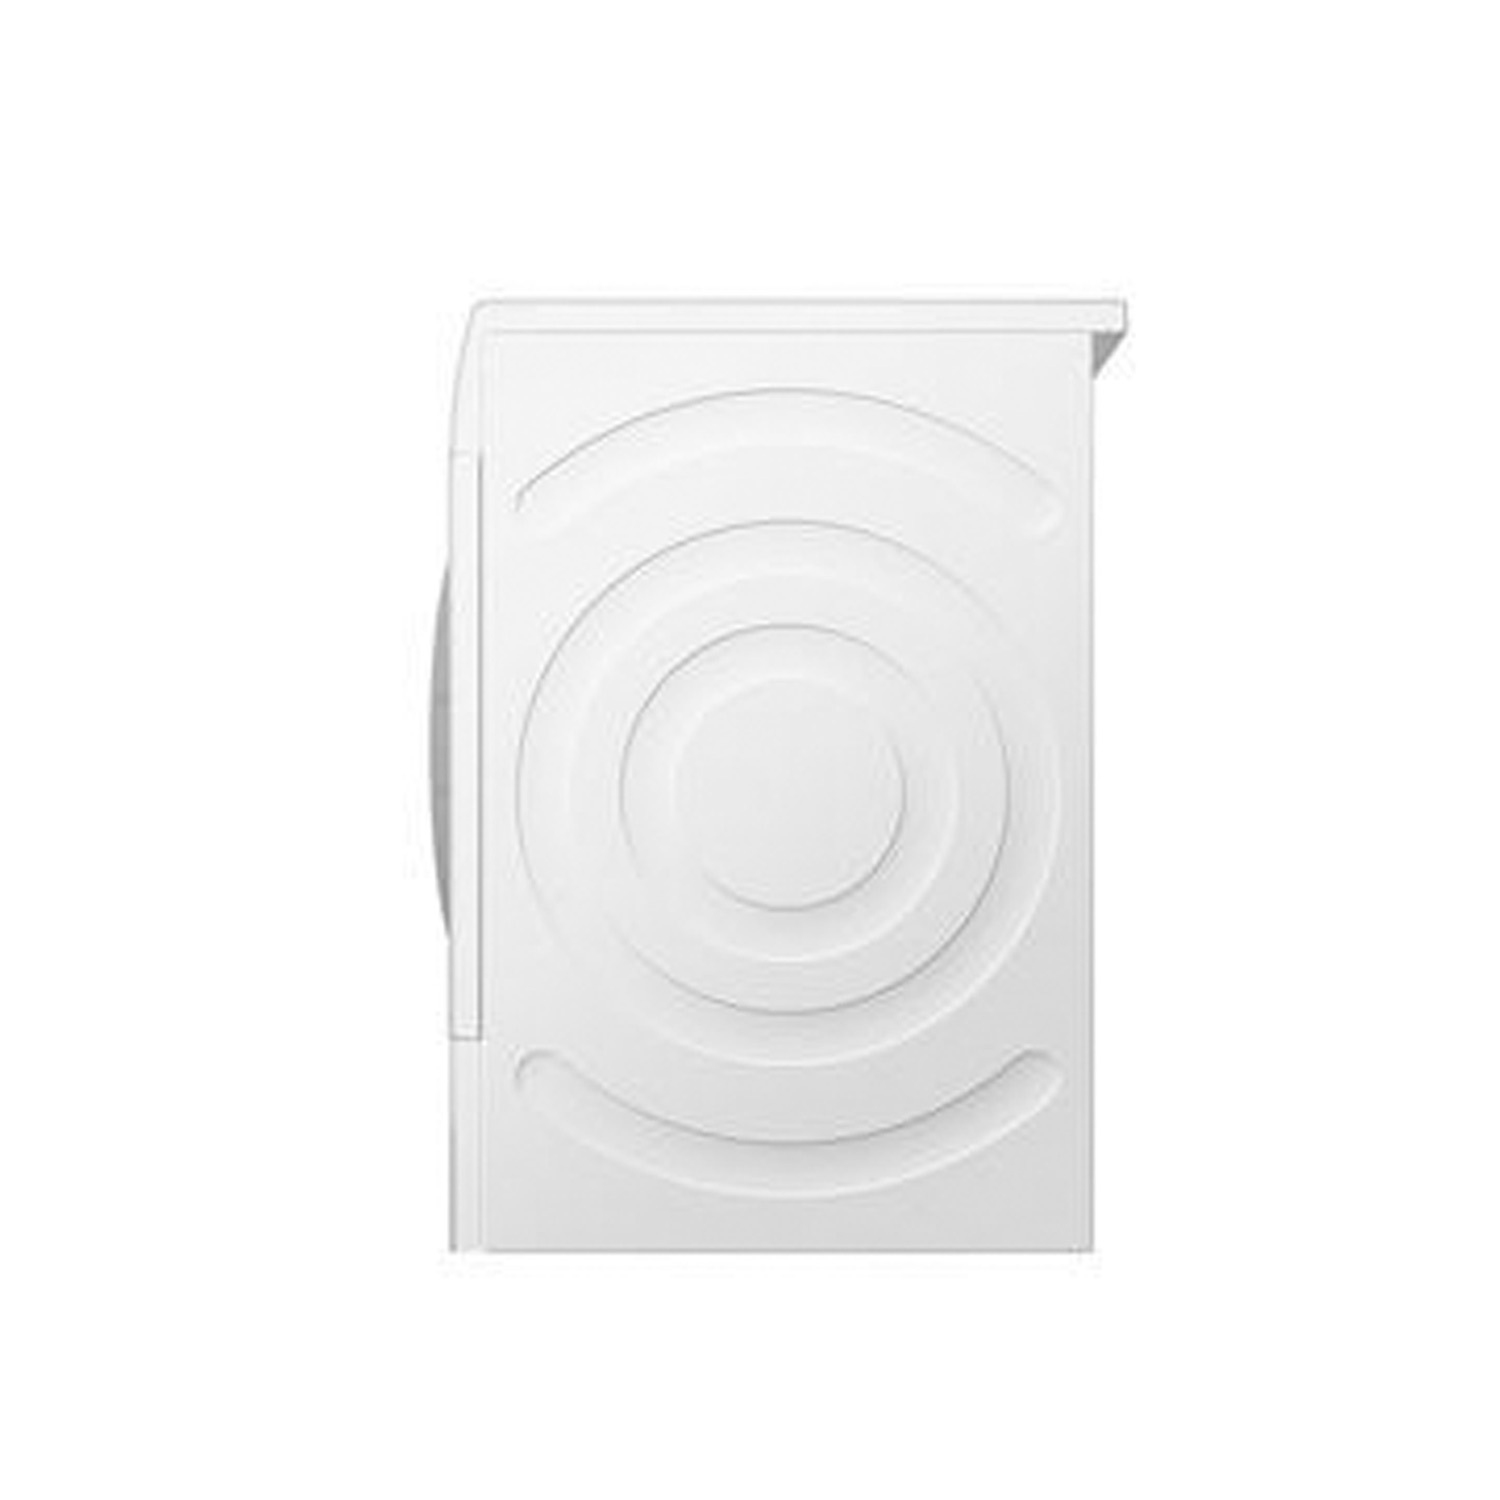 Bosch WQG24509GB 9kg Heat Pump Tumble Dryer - White - 1